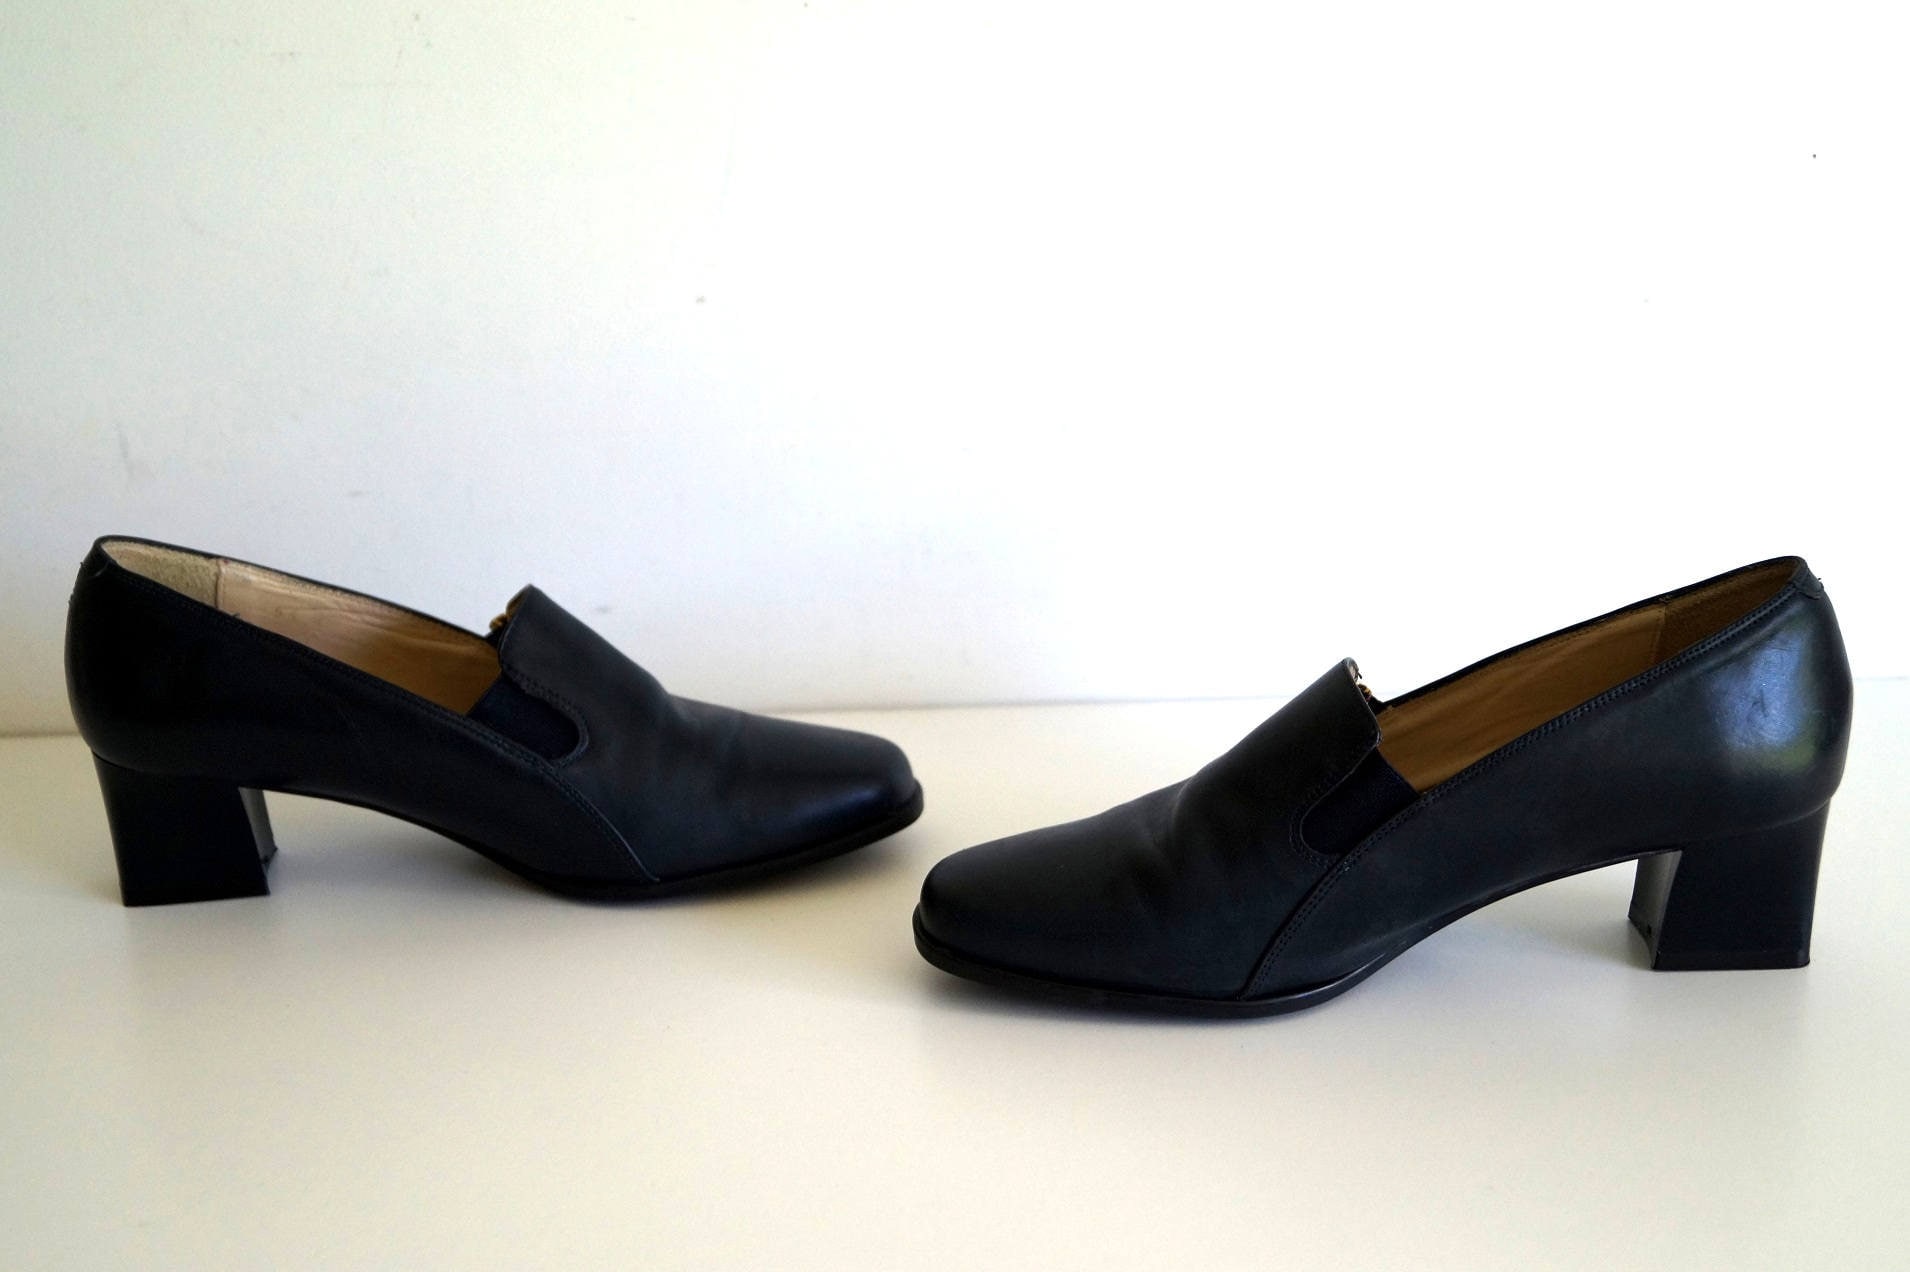 K SHOES Design shoes Womens shoes Blue color genuine leather | Etsy